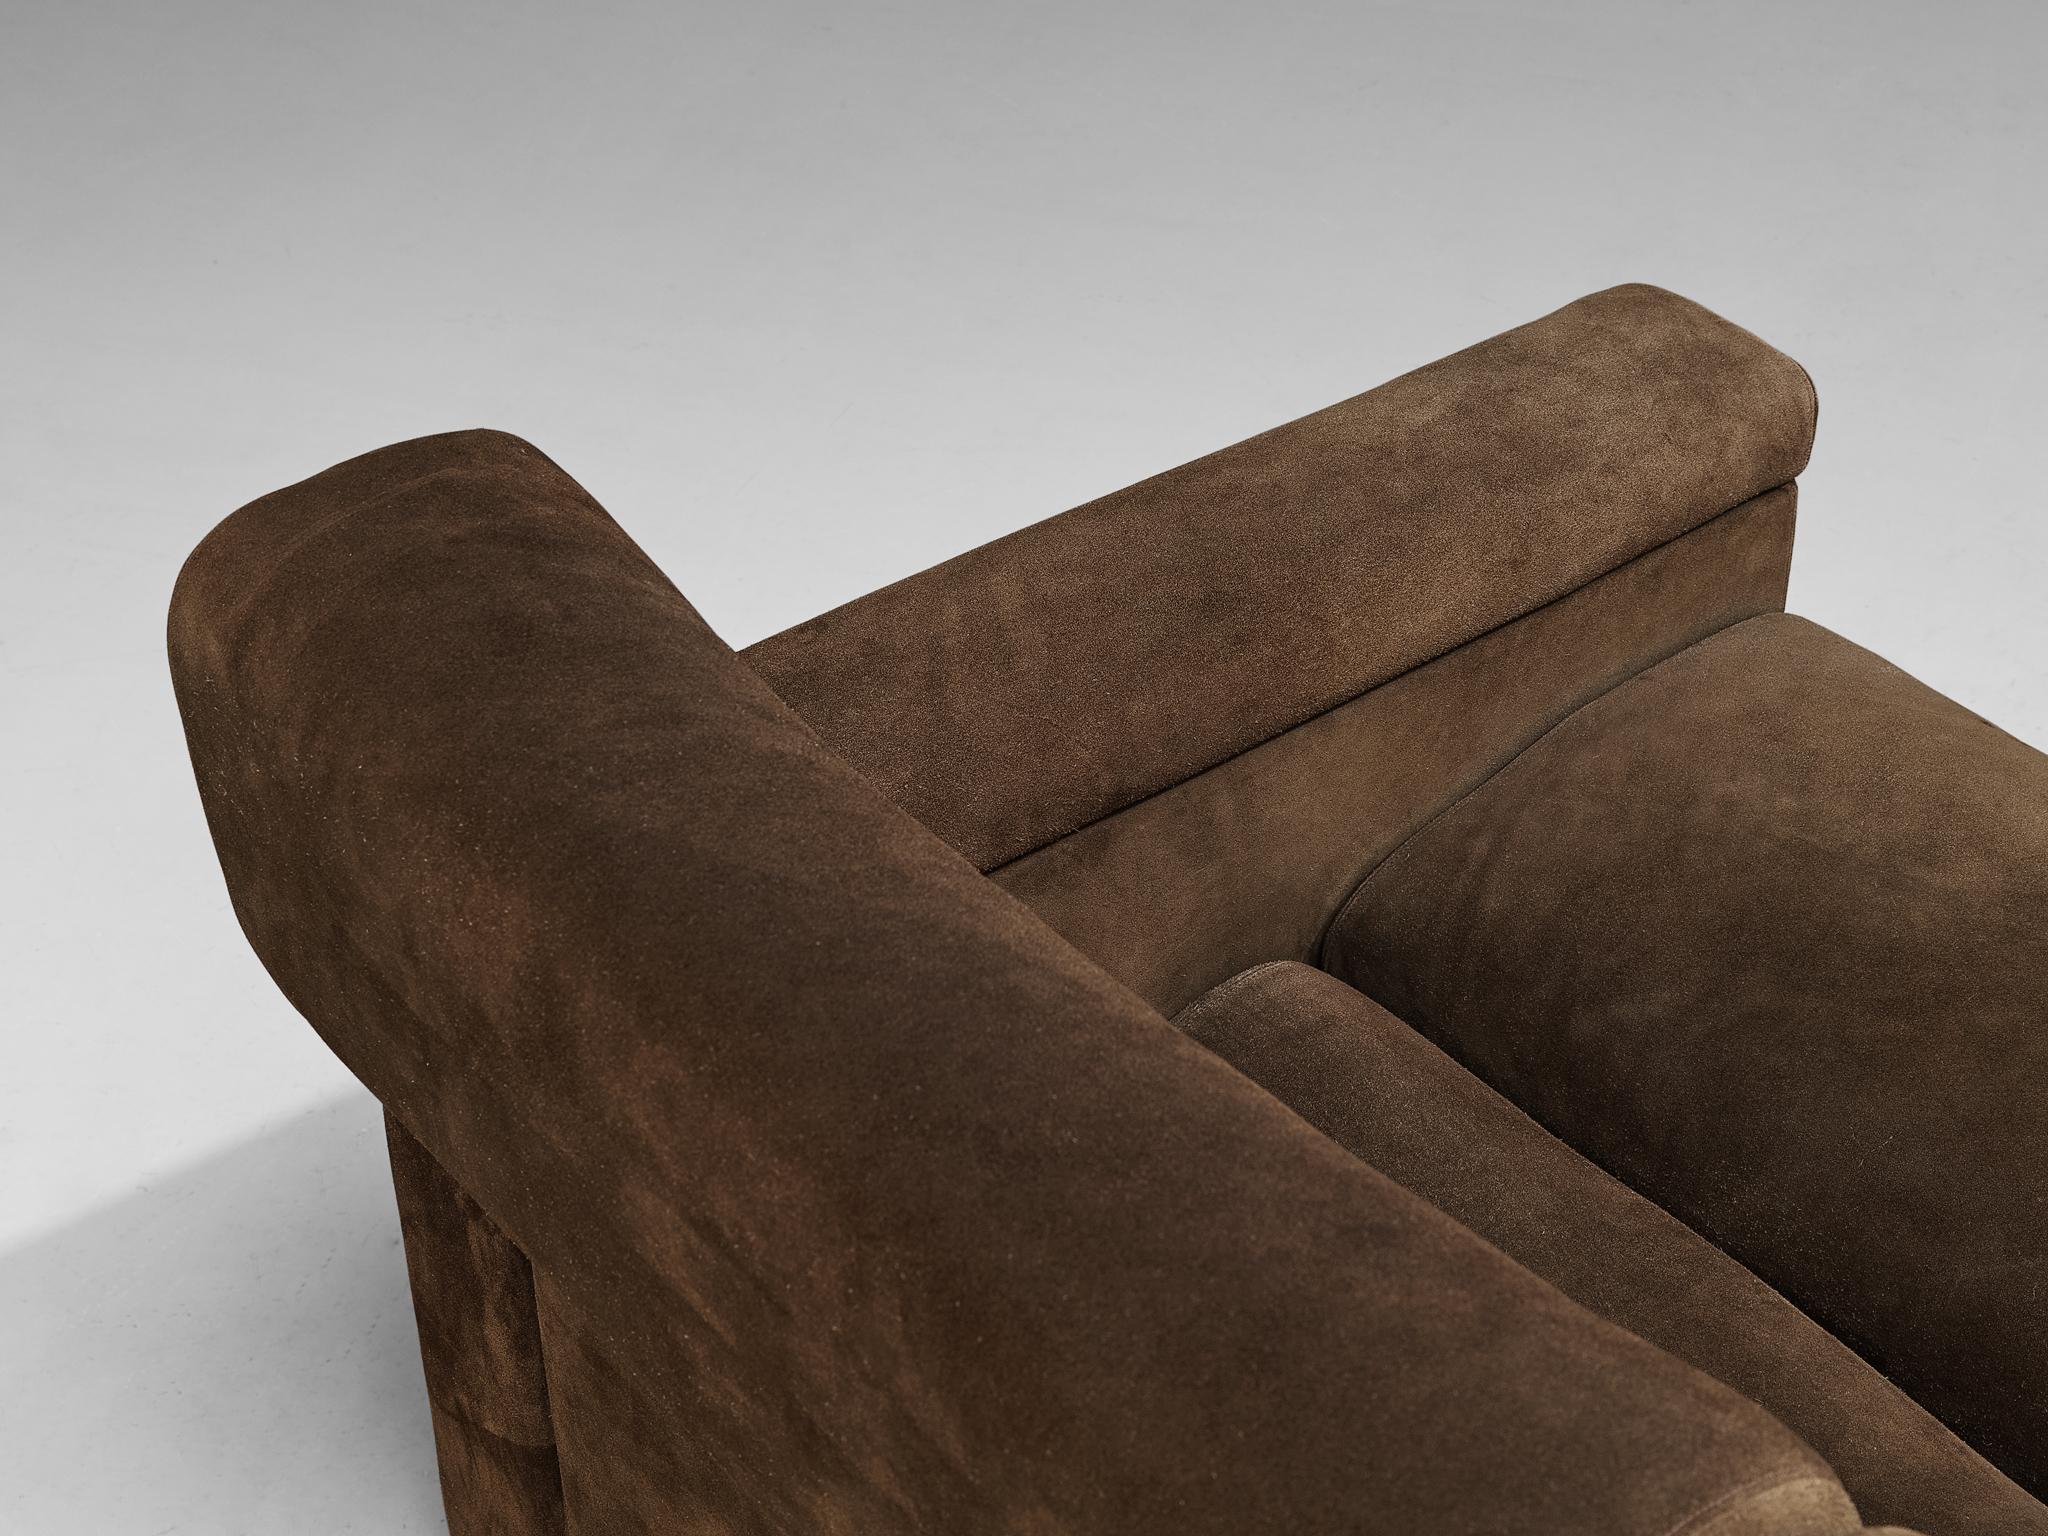 Tecno Italian Bulky Sofa in Dark Brown Suede